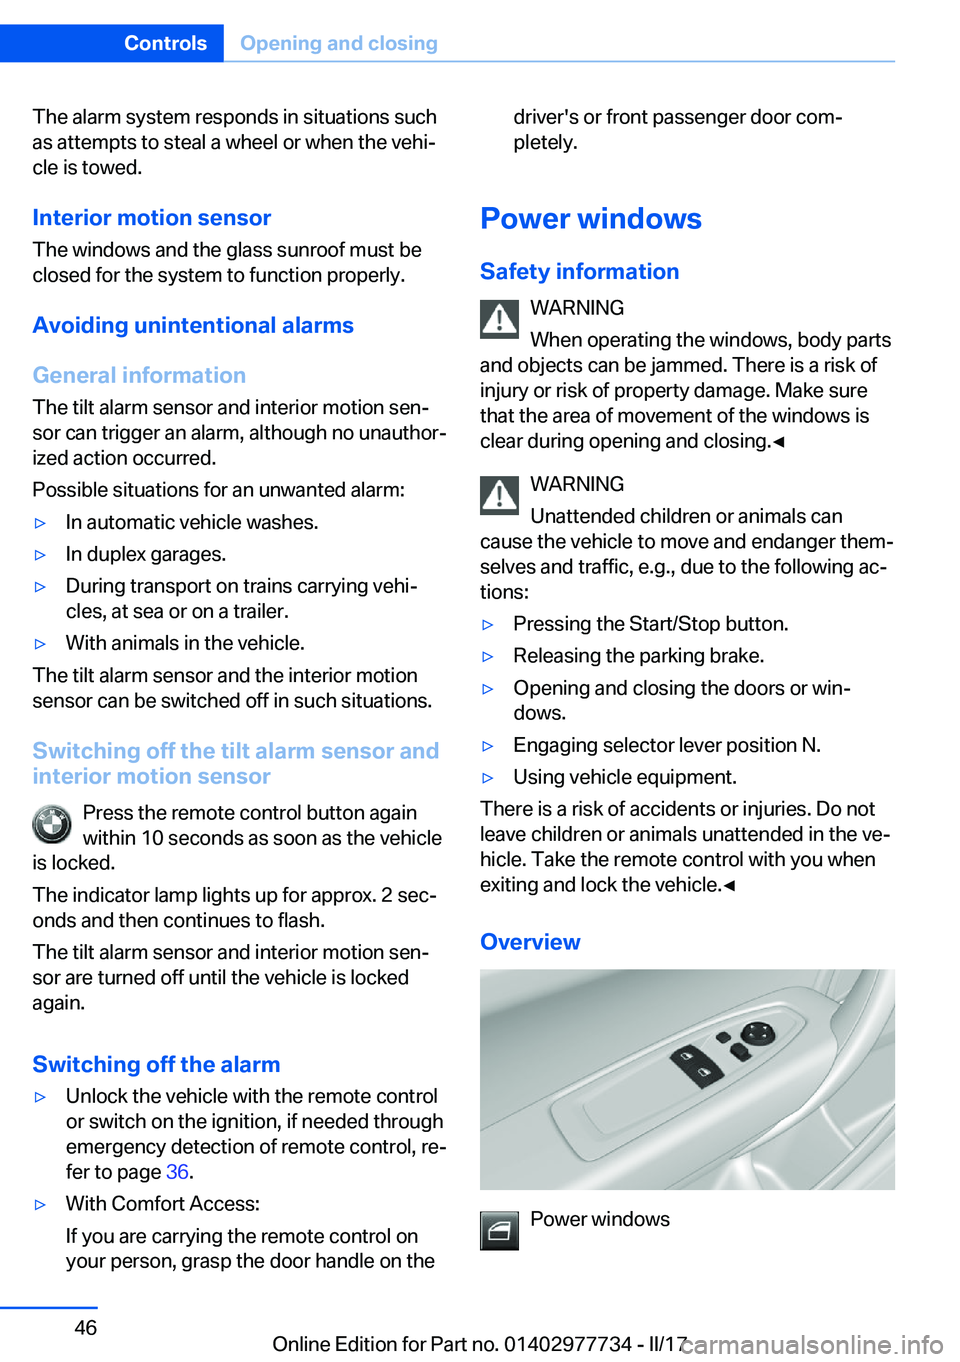 BMW 2 SERIES COUPE 2017 Service Manual �T�h�e� �a�l�a�r�m� �s�y�s�t�e�m� �r�e�s�p�o�n�d�s� �i�n� �s�i�t�u�a�t�i�o�n�s� �s�u�c�h
�a�s� �a�t�t�e�m�p�t�s� �t�o� �s�t�e�a�l� �a� �w�h�e�e�l� �o�r� �w�h�e�n� �t�h�e� �v�e�h�ij
�c�l�e� �i�s� �t�o